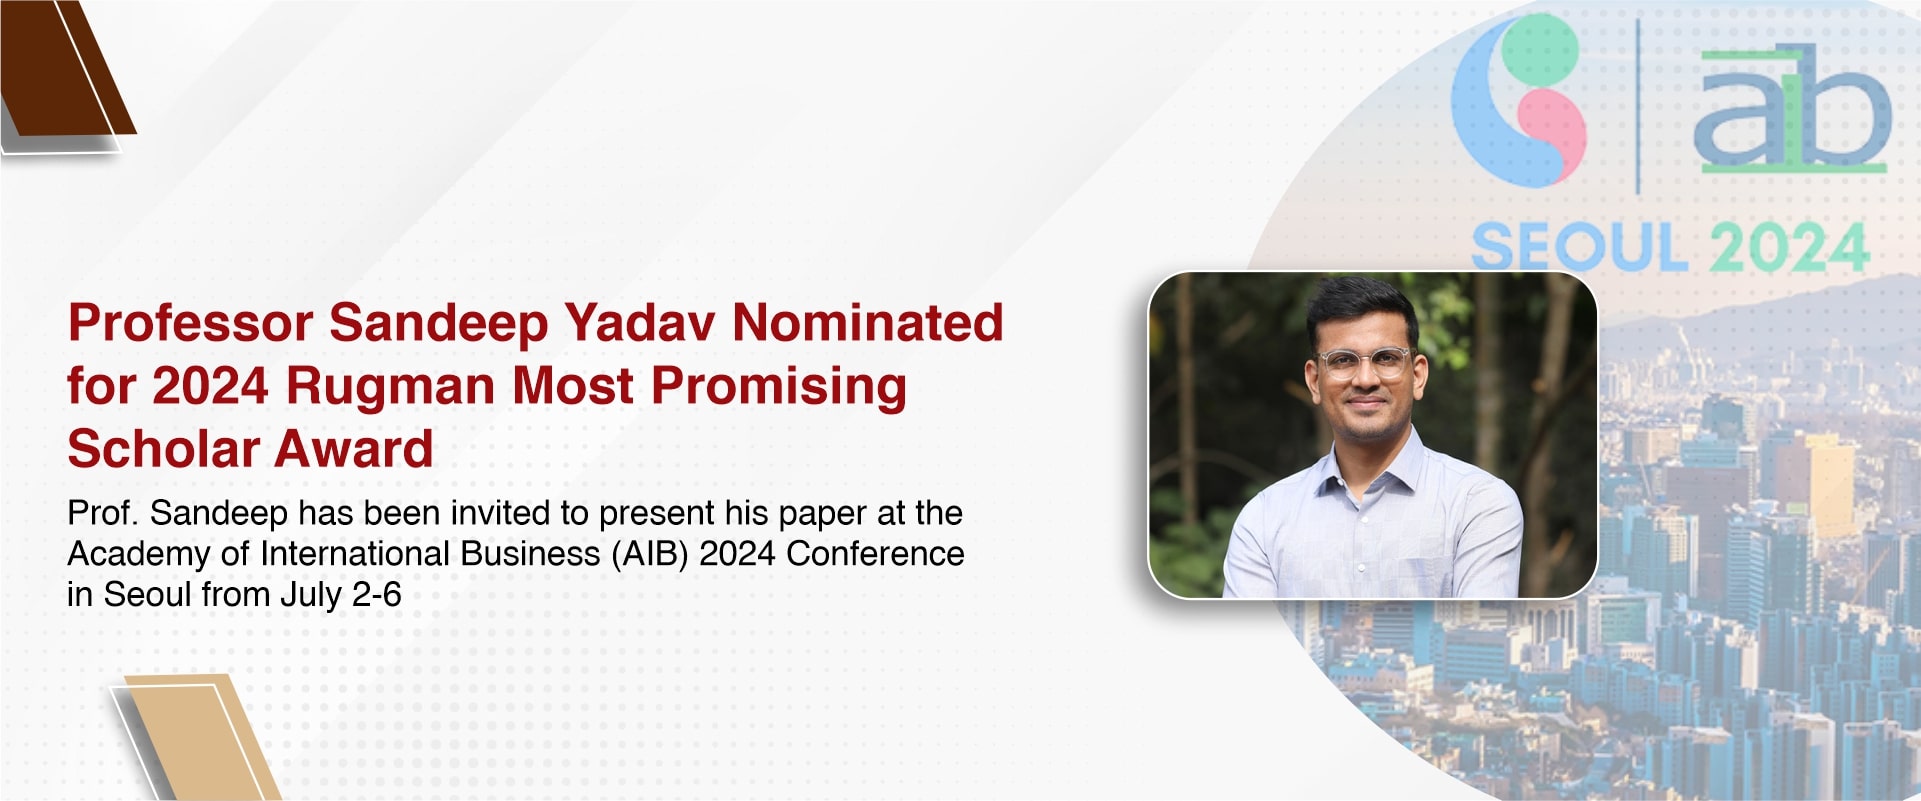 Professor Sandeep Yadav Nominated for 2024 Rugman Most Promising Scholar Award